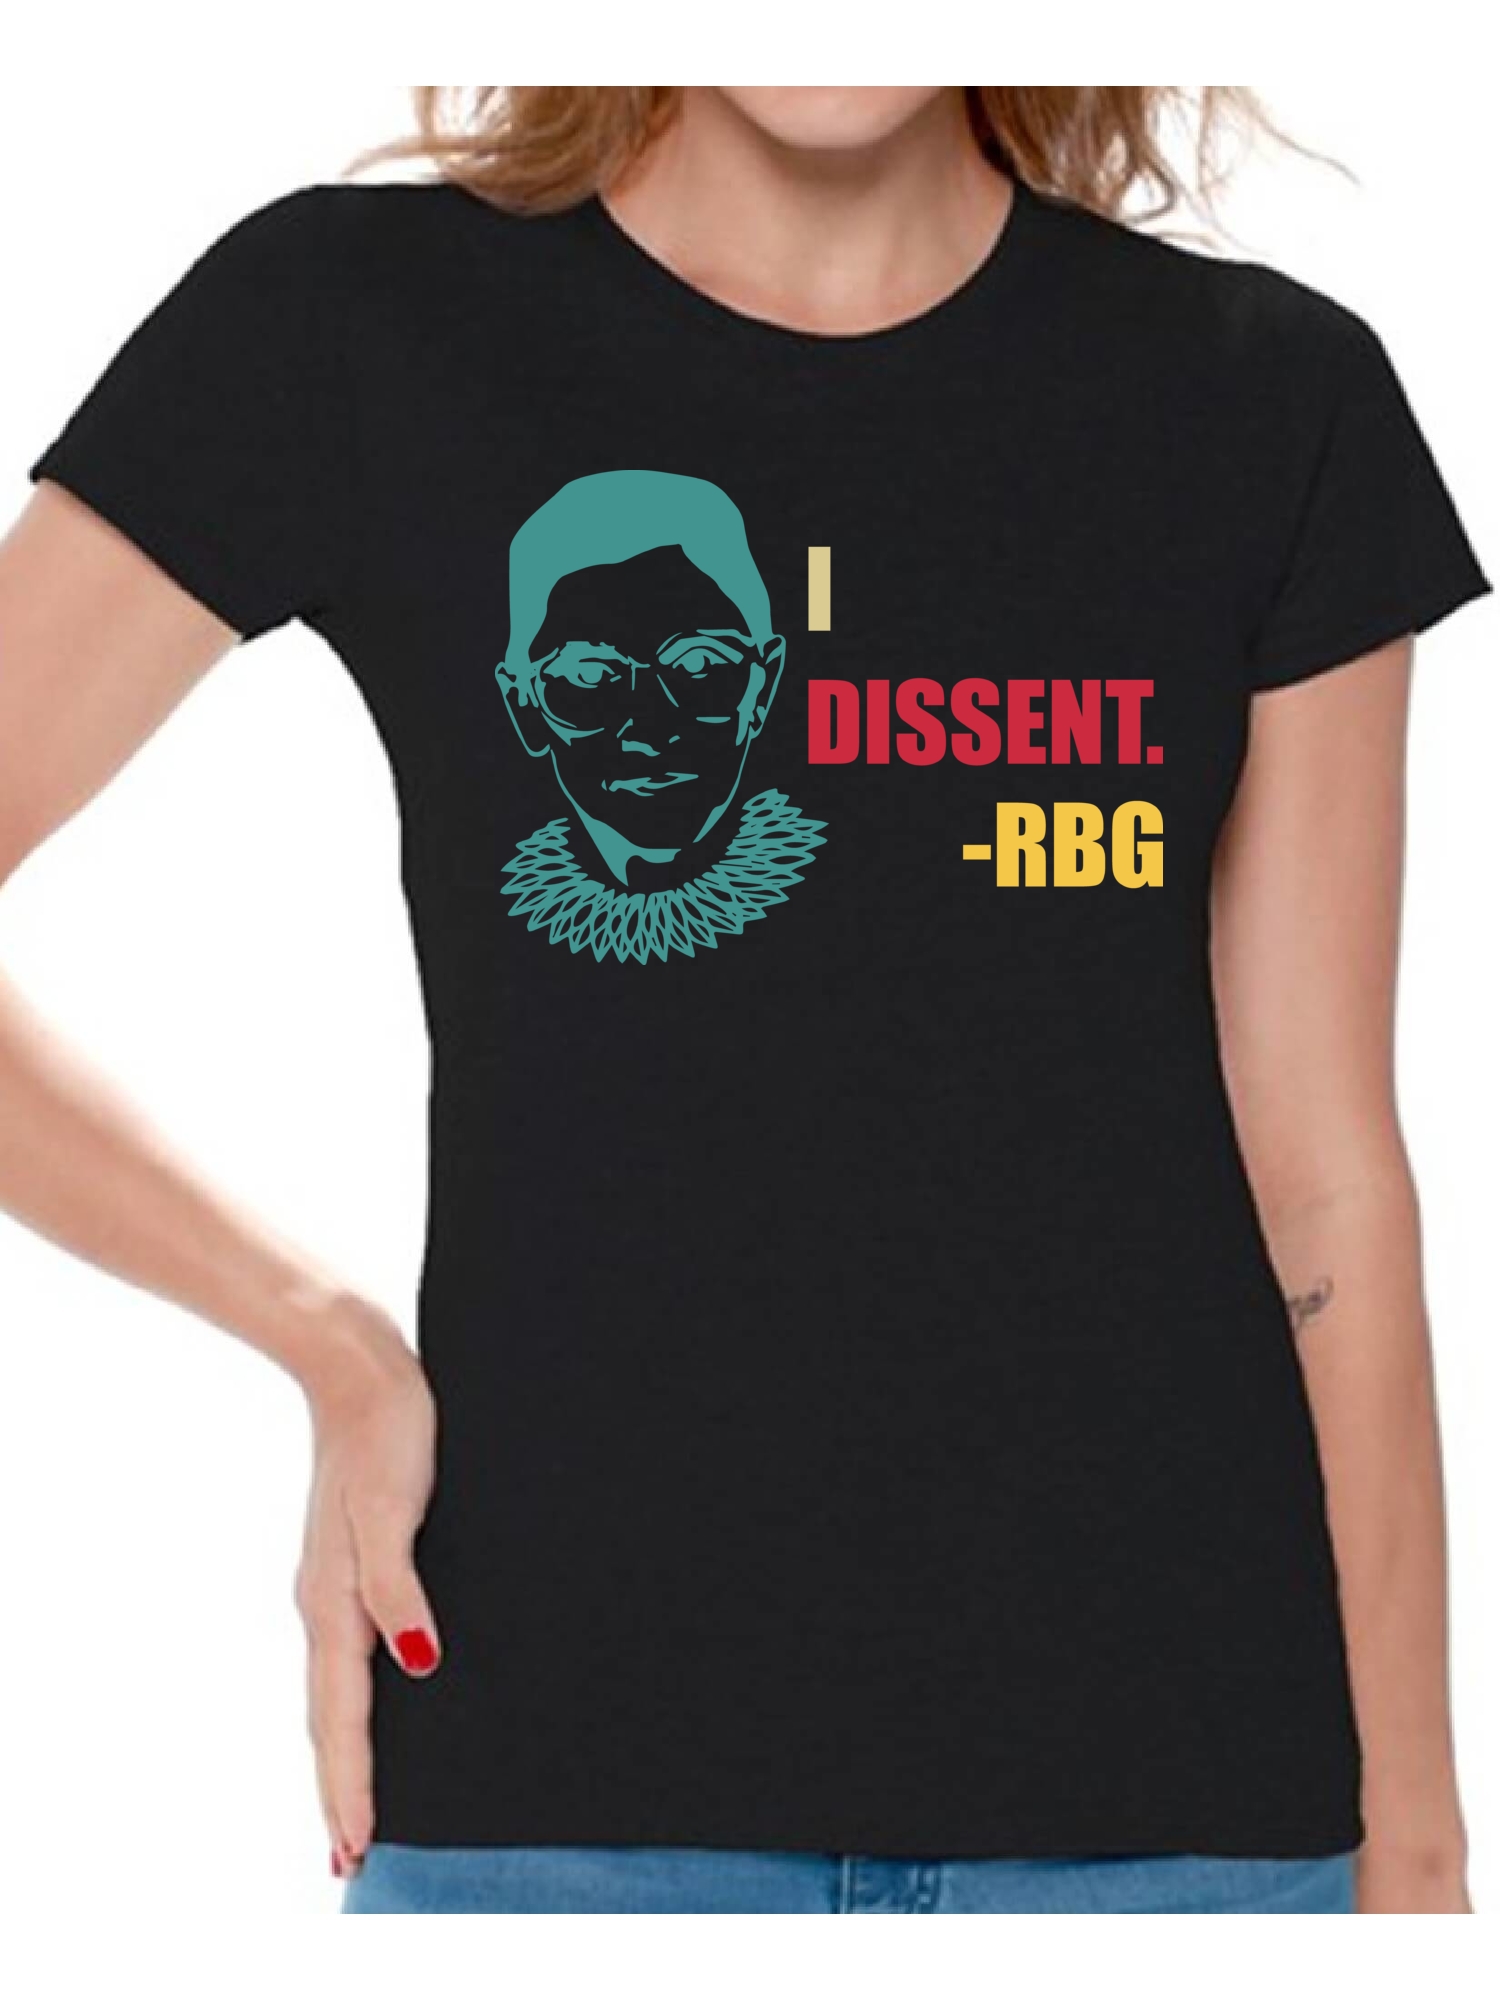 Awkward Styles Ruth Bader Ginsburg Shirt for Women Dissent RBG Notorious Shirt RBG T Shirt Ladies Support Women Empowerment T-shirt - image 1 of 4